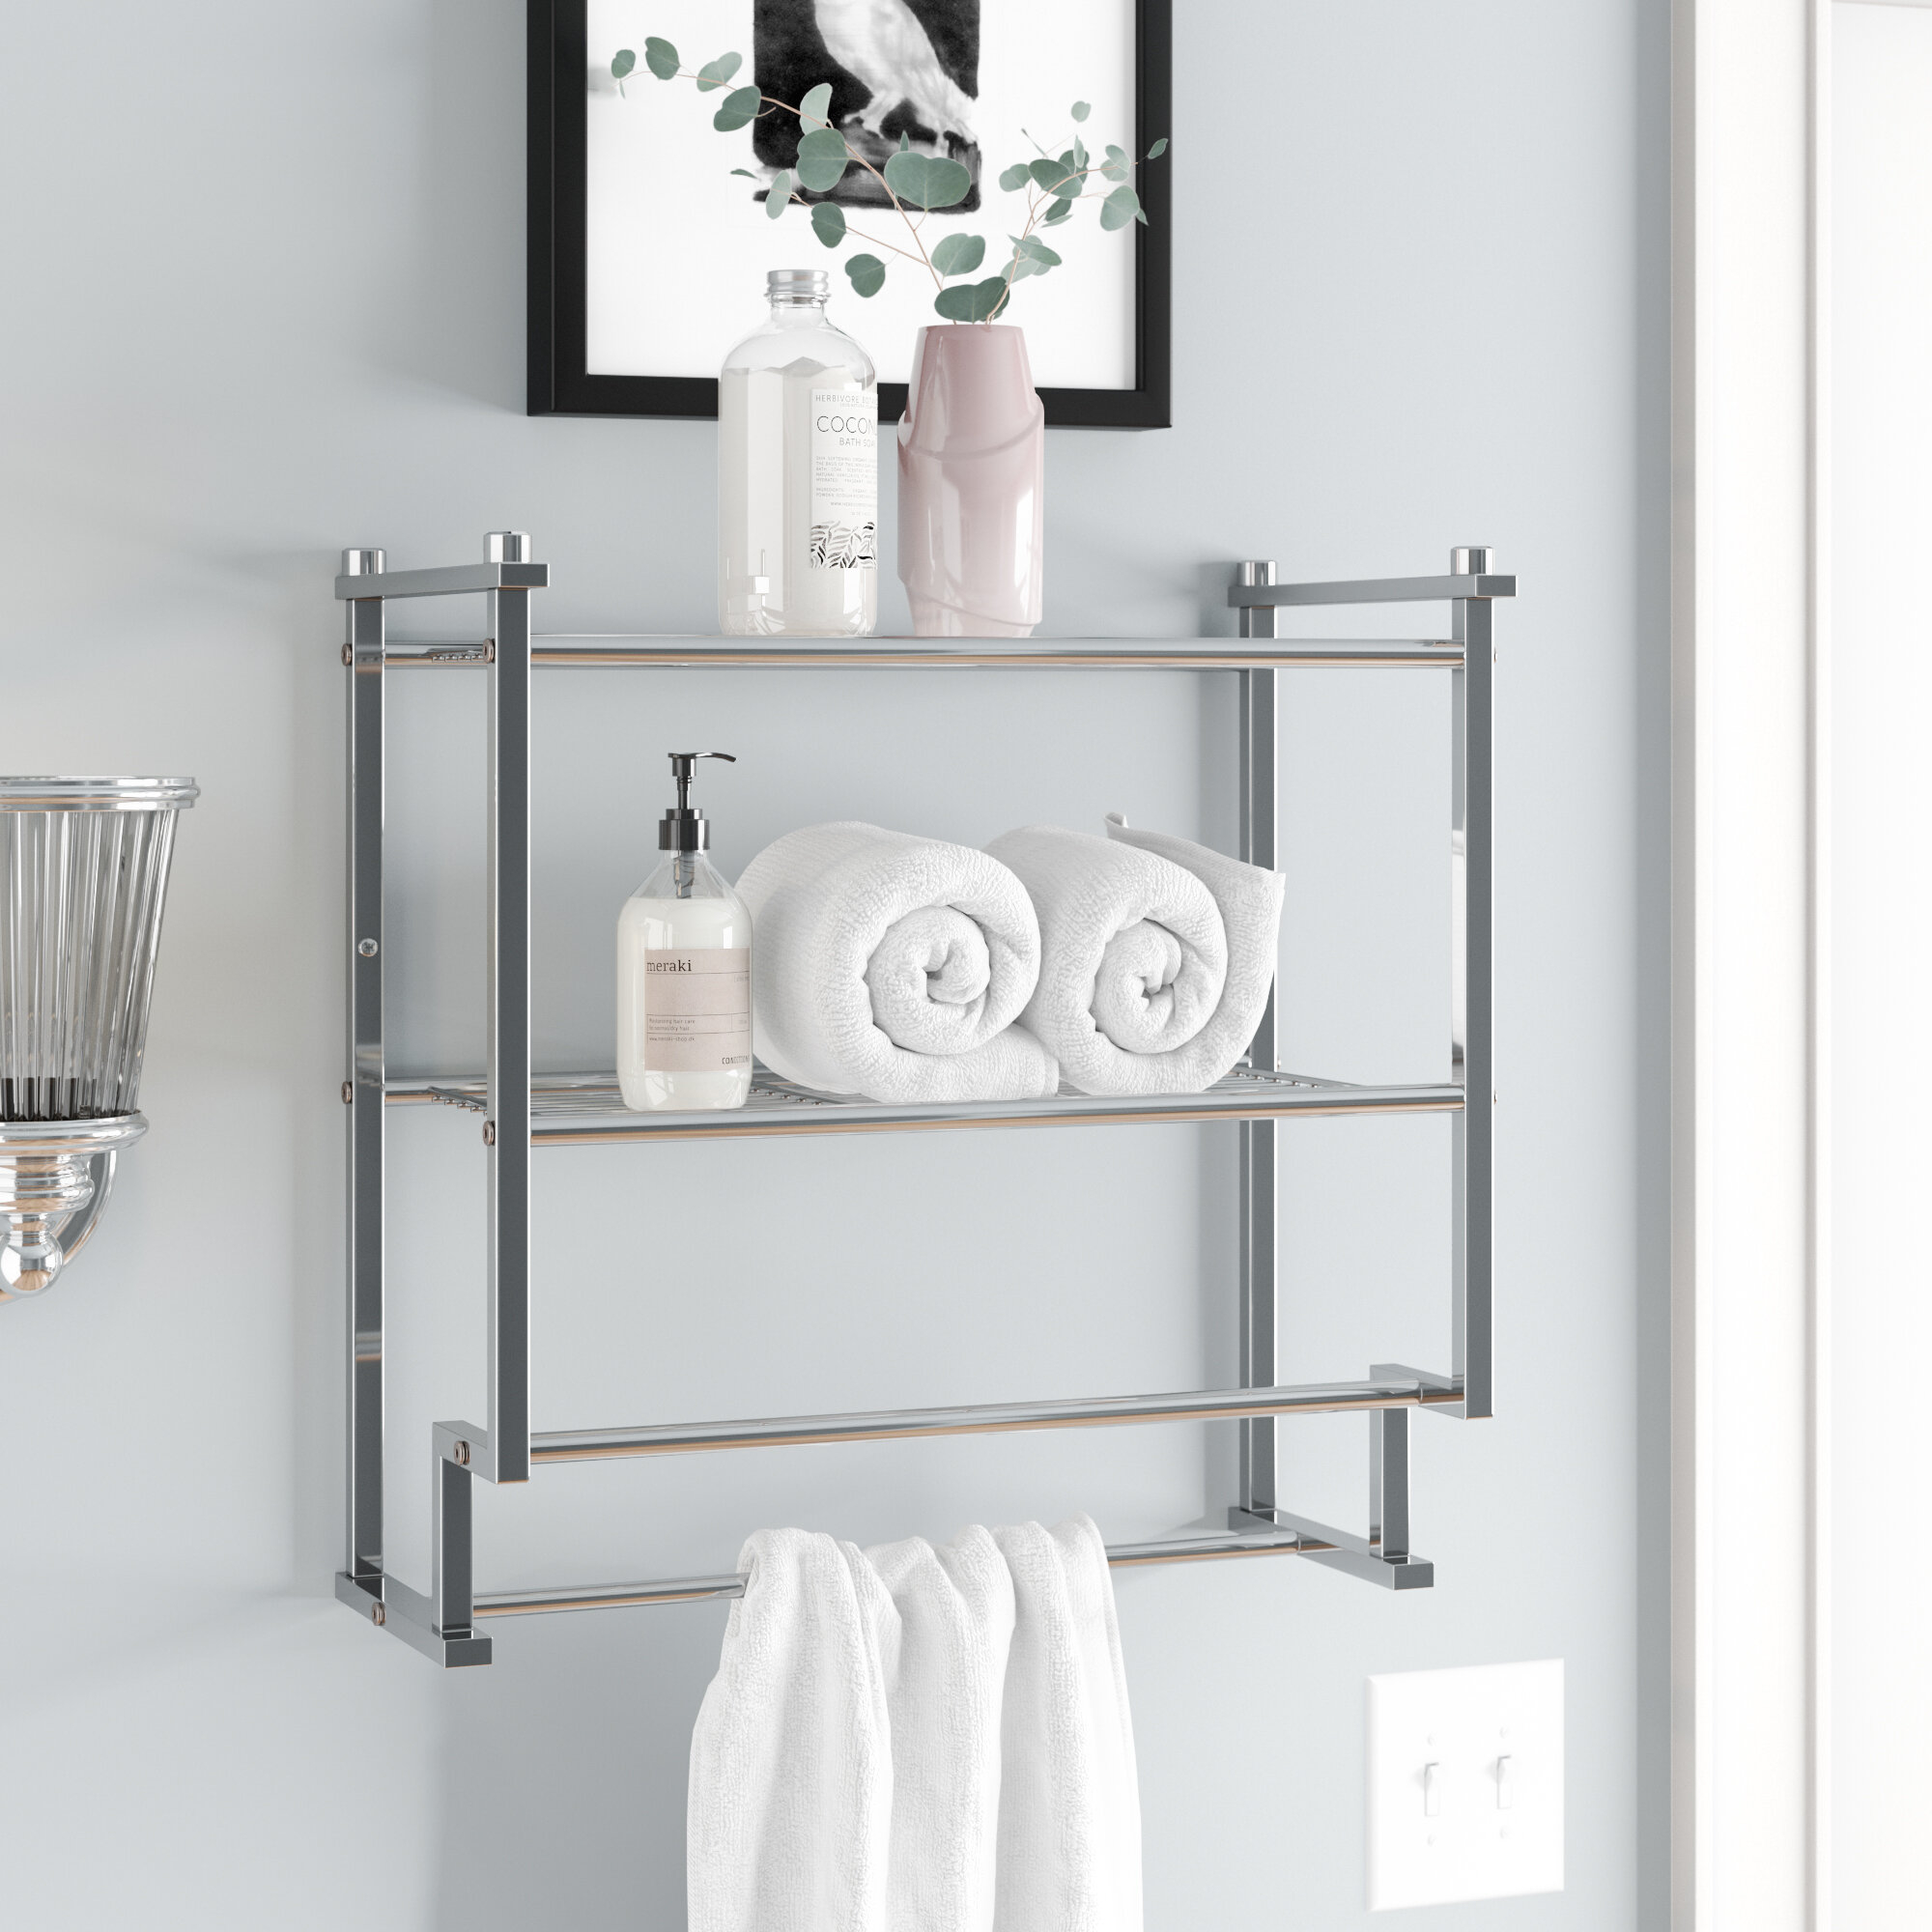 Bathroom Shelf With Towel Bar You Ll, Bathroom Shelves With Towel Bar Ideas